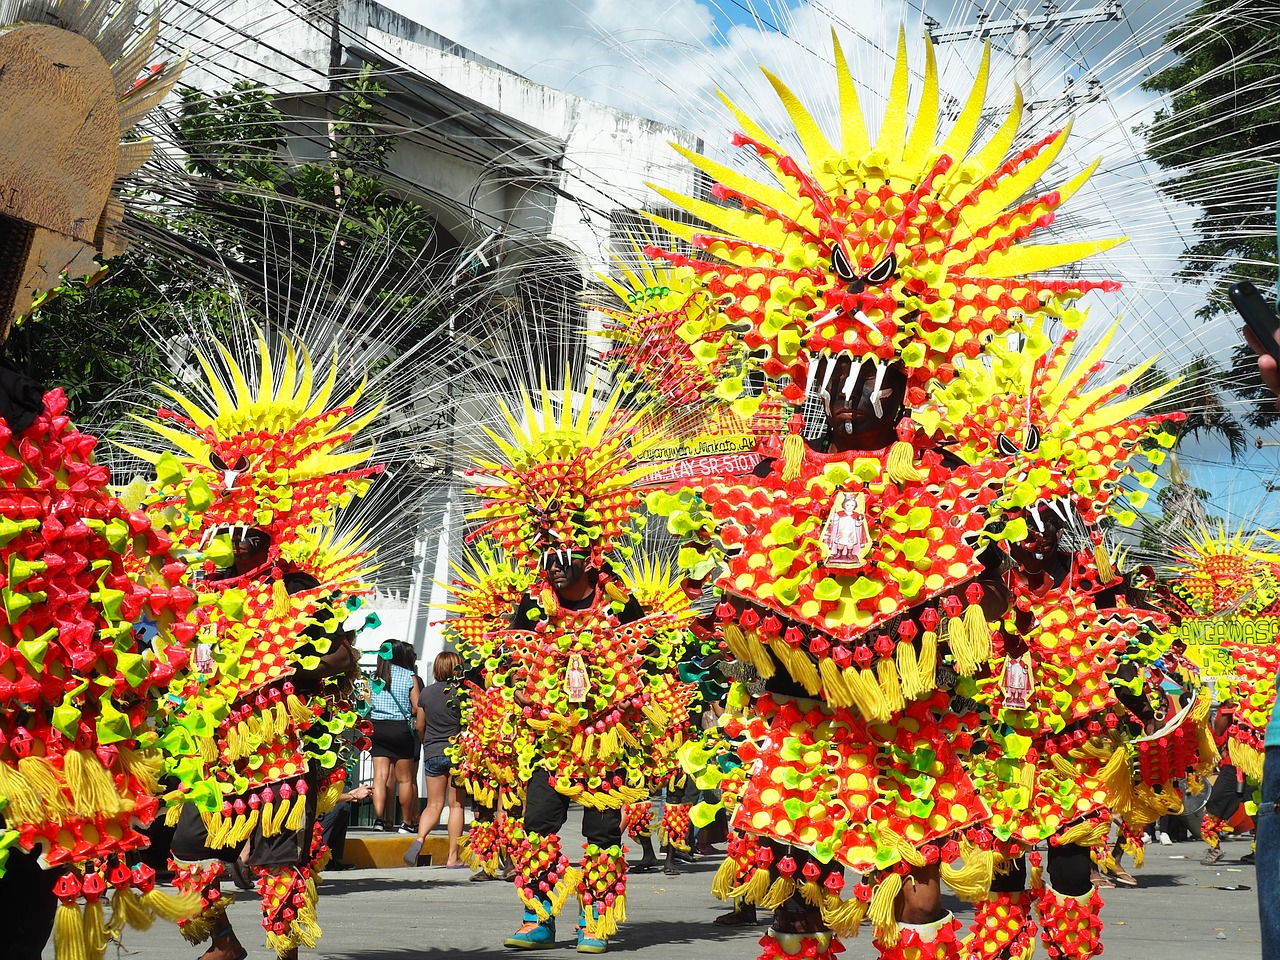 mardigras festival philippines free photo